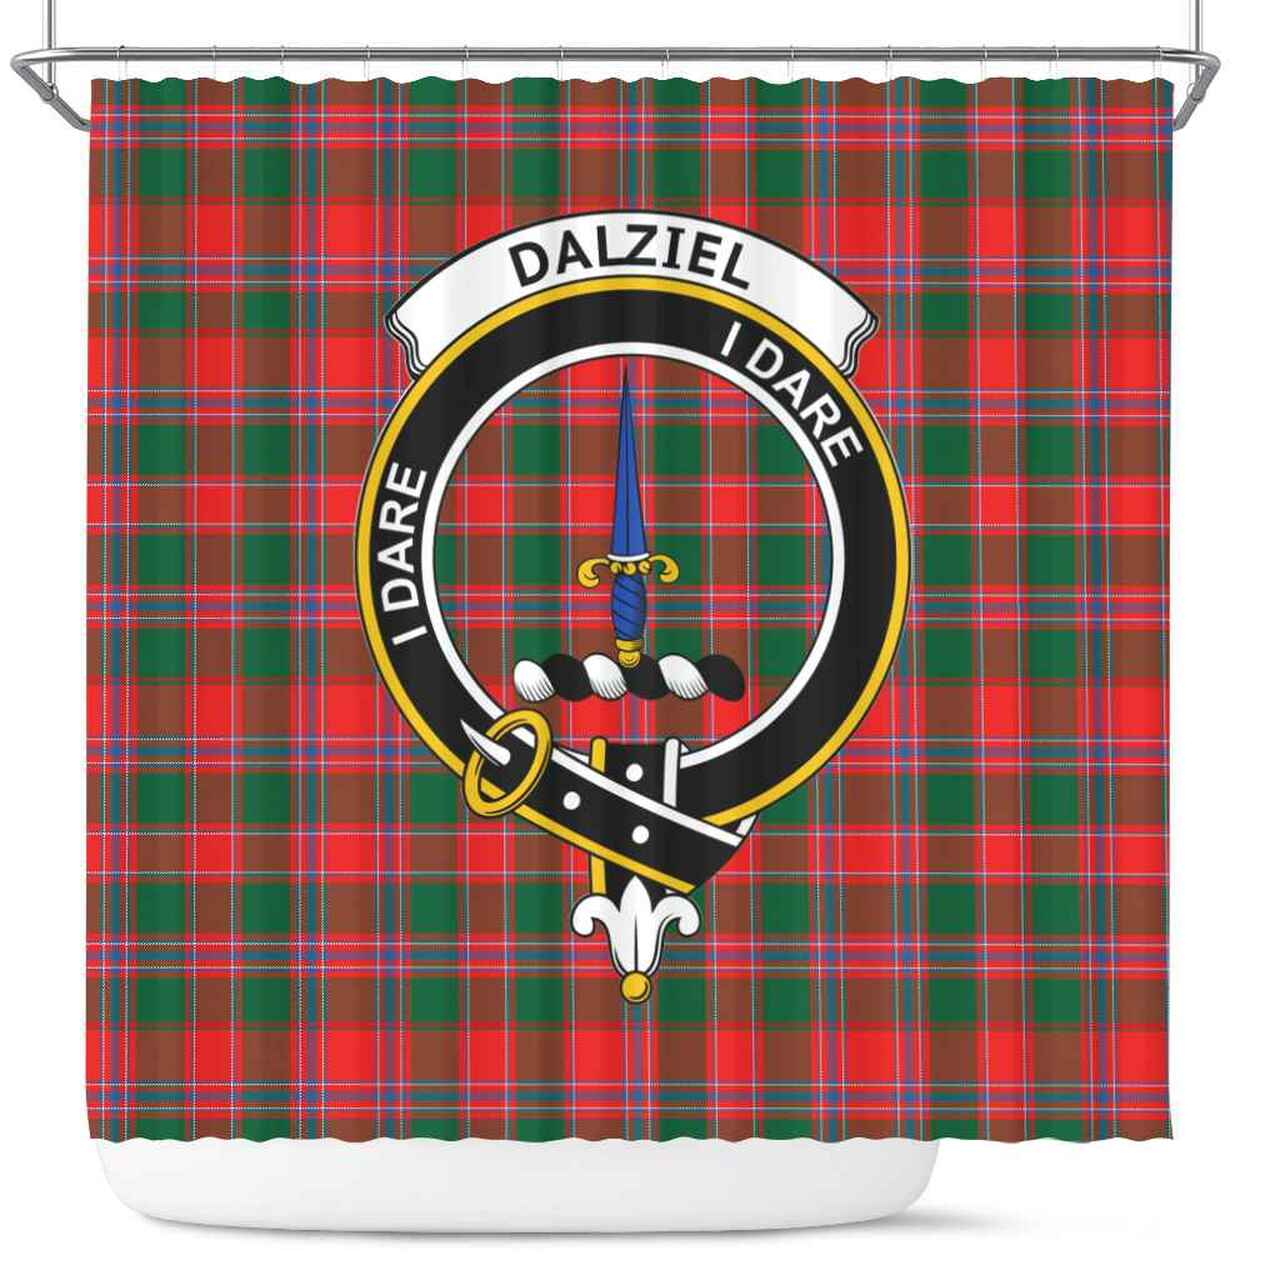 Dalziel Tartan Crest Shower Curtain